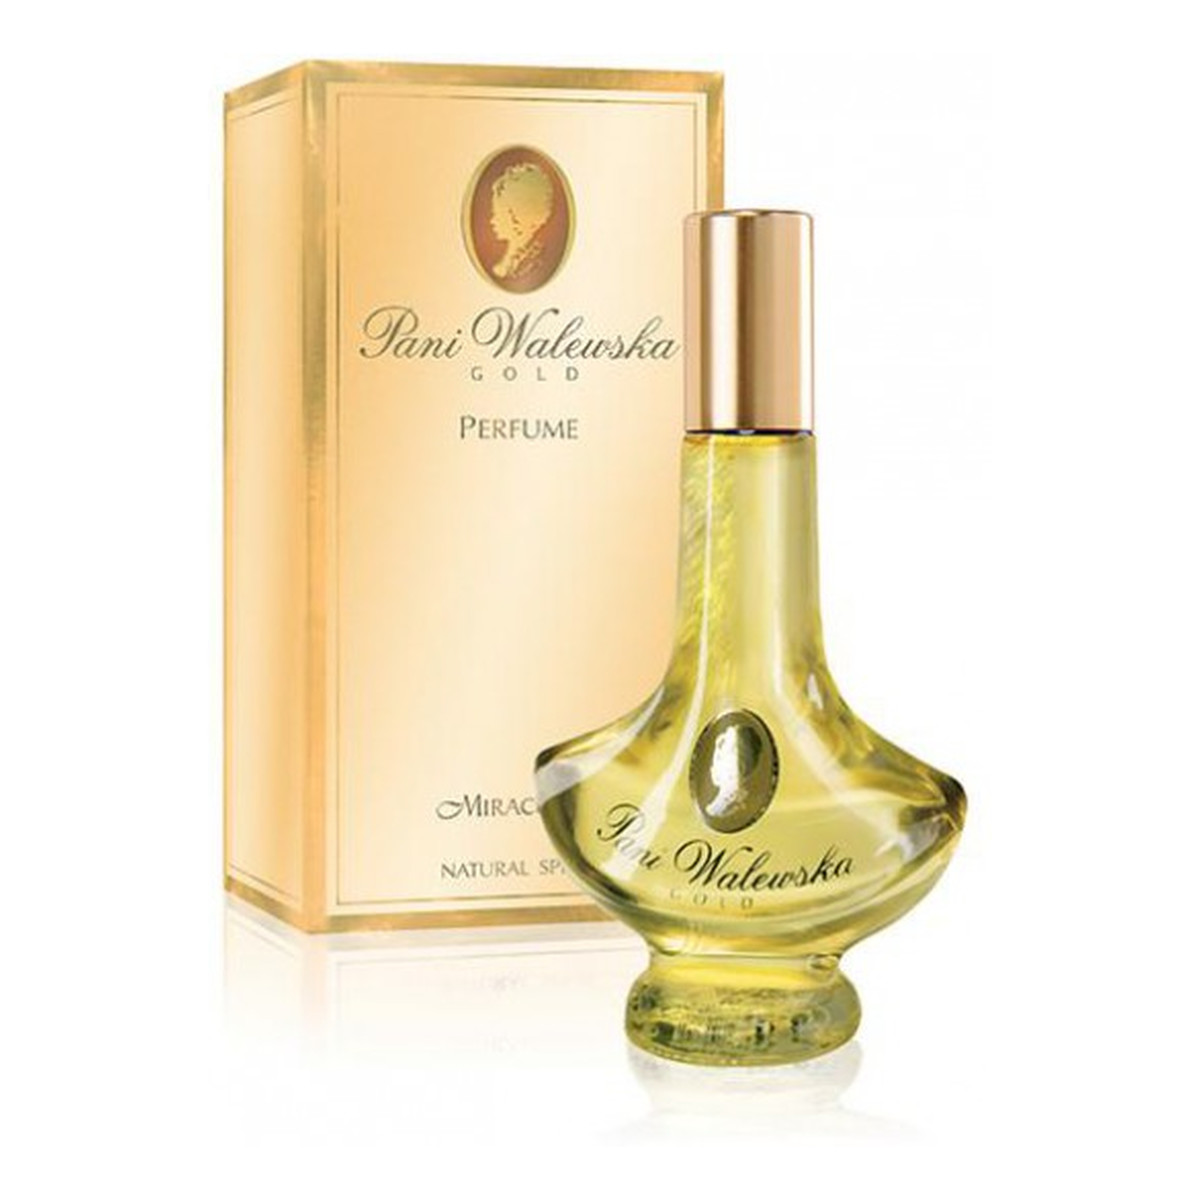 Pani Walewska Gold Perfumy 30ml